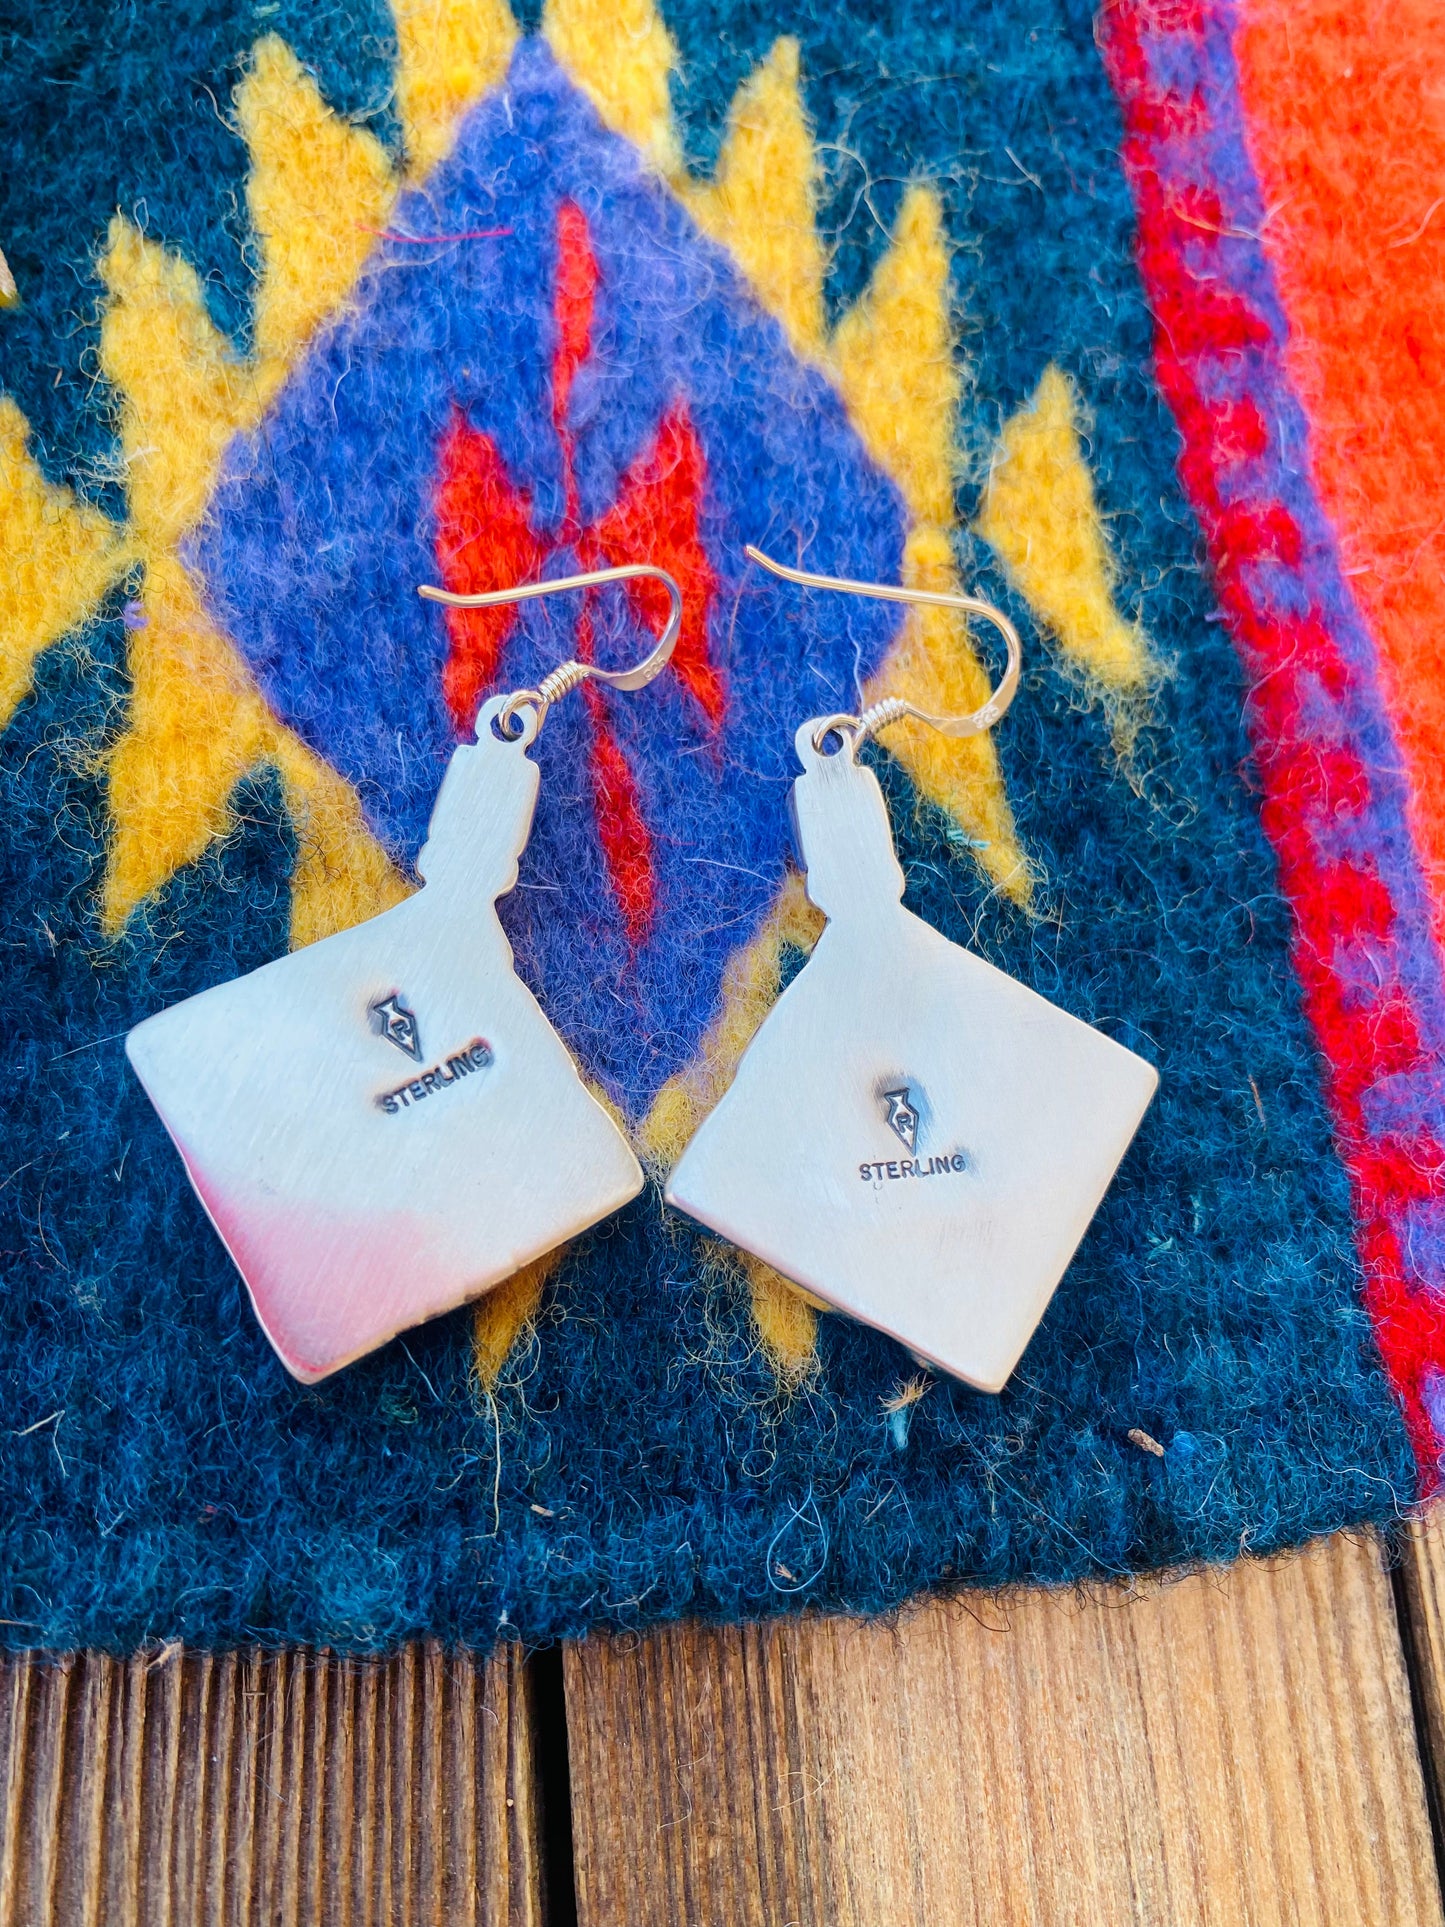 Navajo Sleeping Beauty Turquoise & Sterling Silver Cluster Dangle Earrings